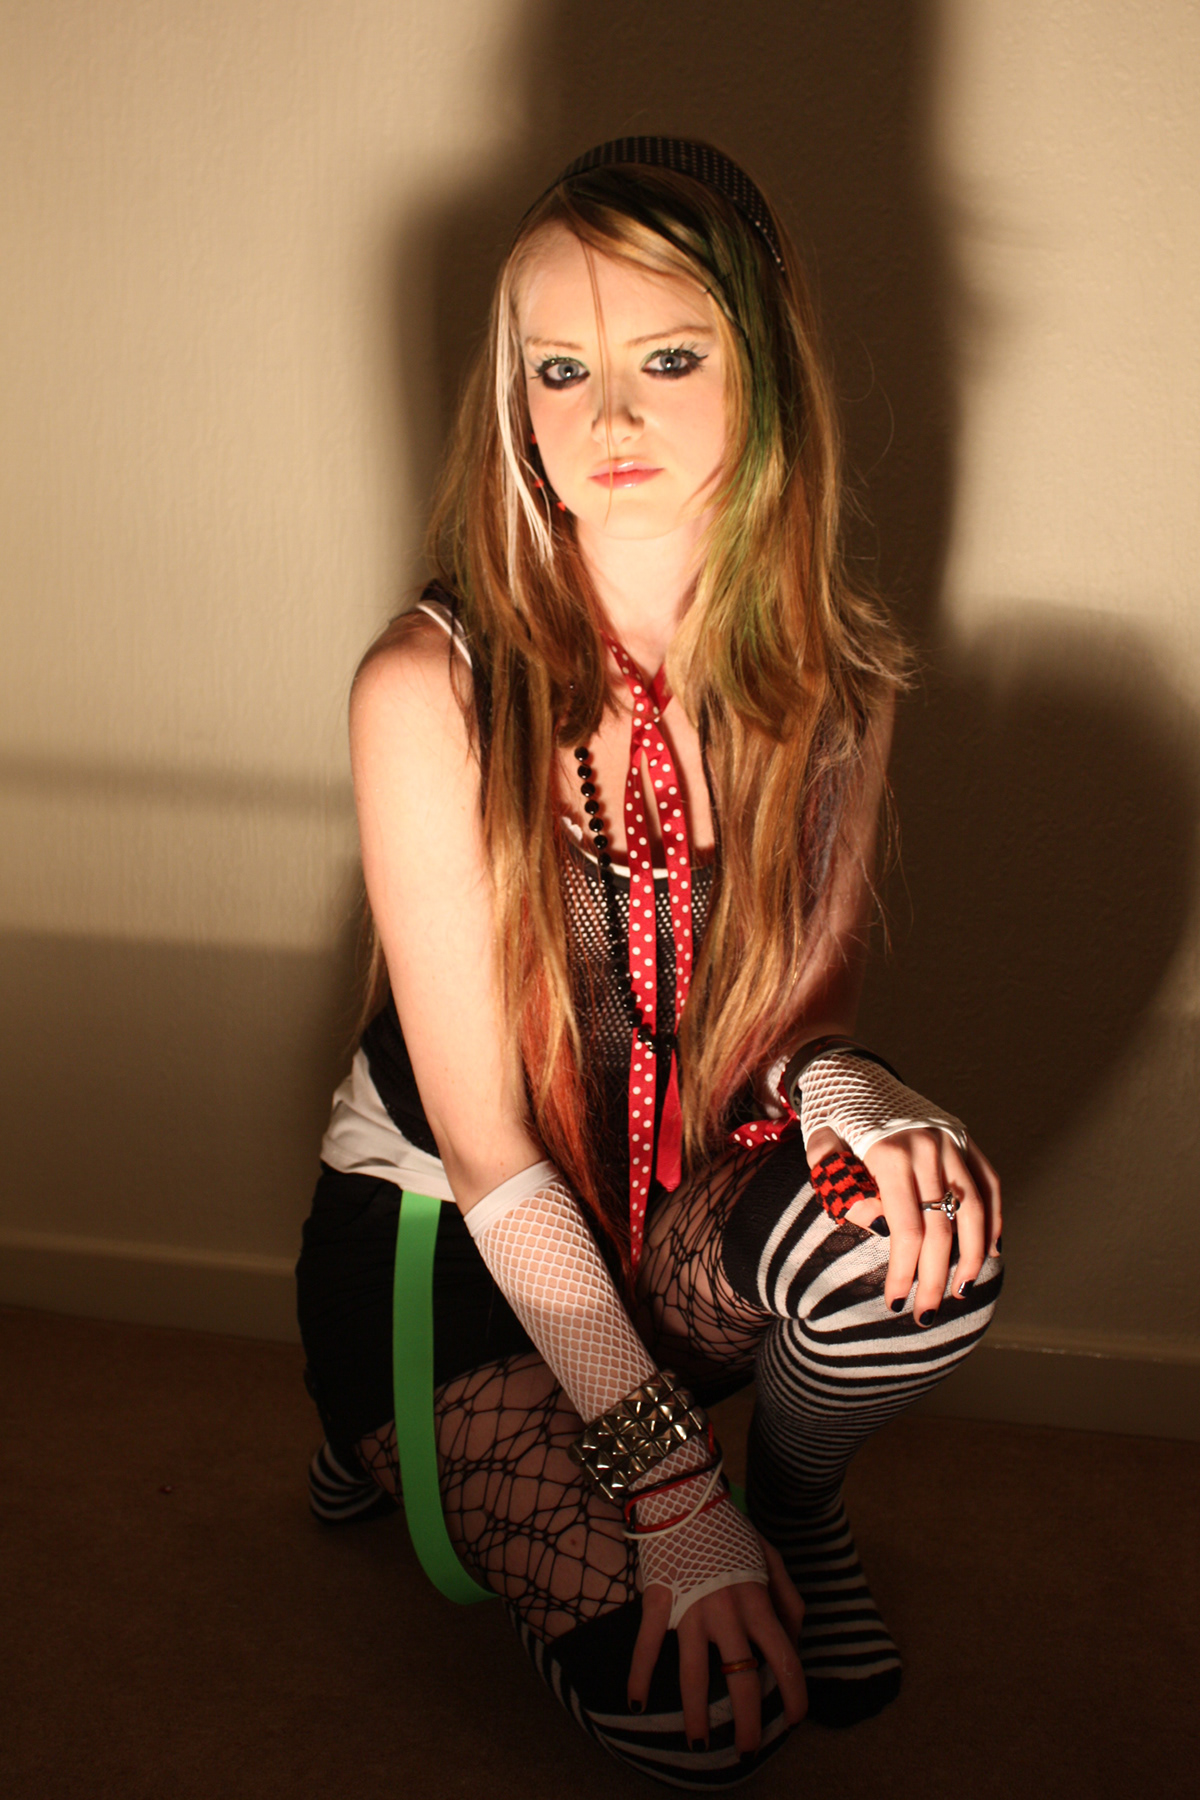 Avril Lavigne thebestdamnthing album redesign